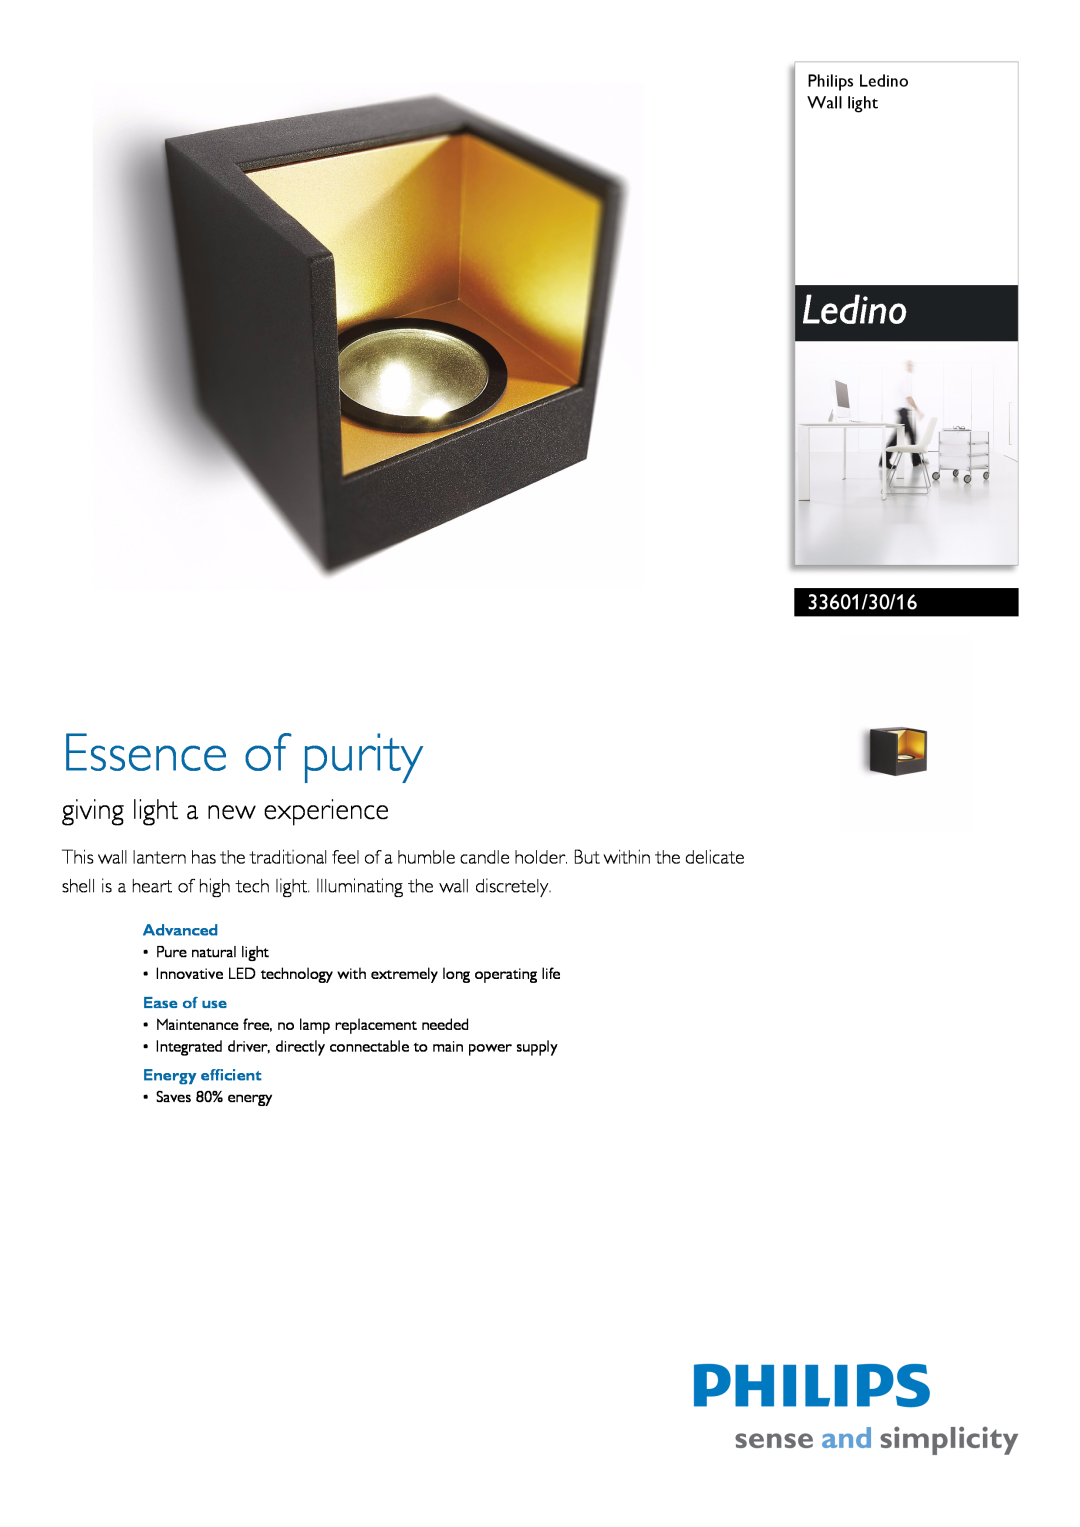 Philips 33601/30/16 manual Philips Ledino Wall light, Advanced, Ease of use, Energy efficient, Essence of purity 